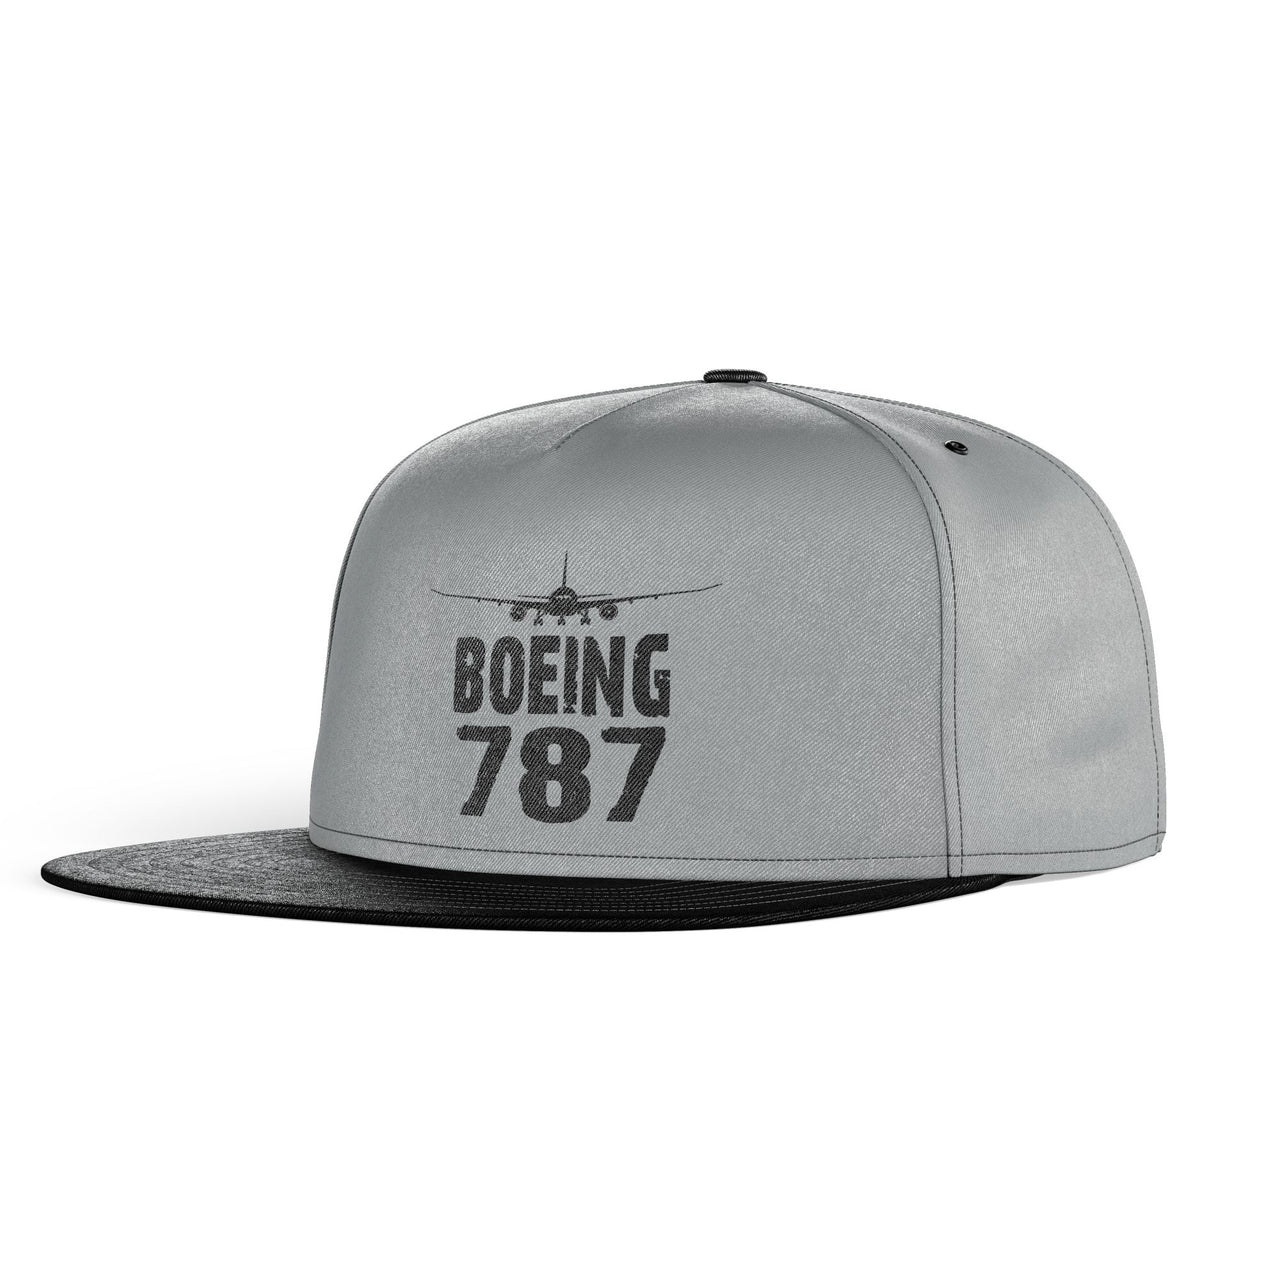 Boeing 787 & Plane Designed Snapback Caps & Hats